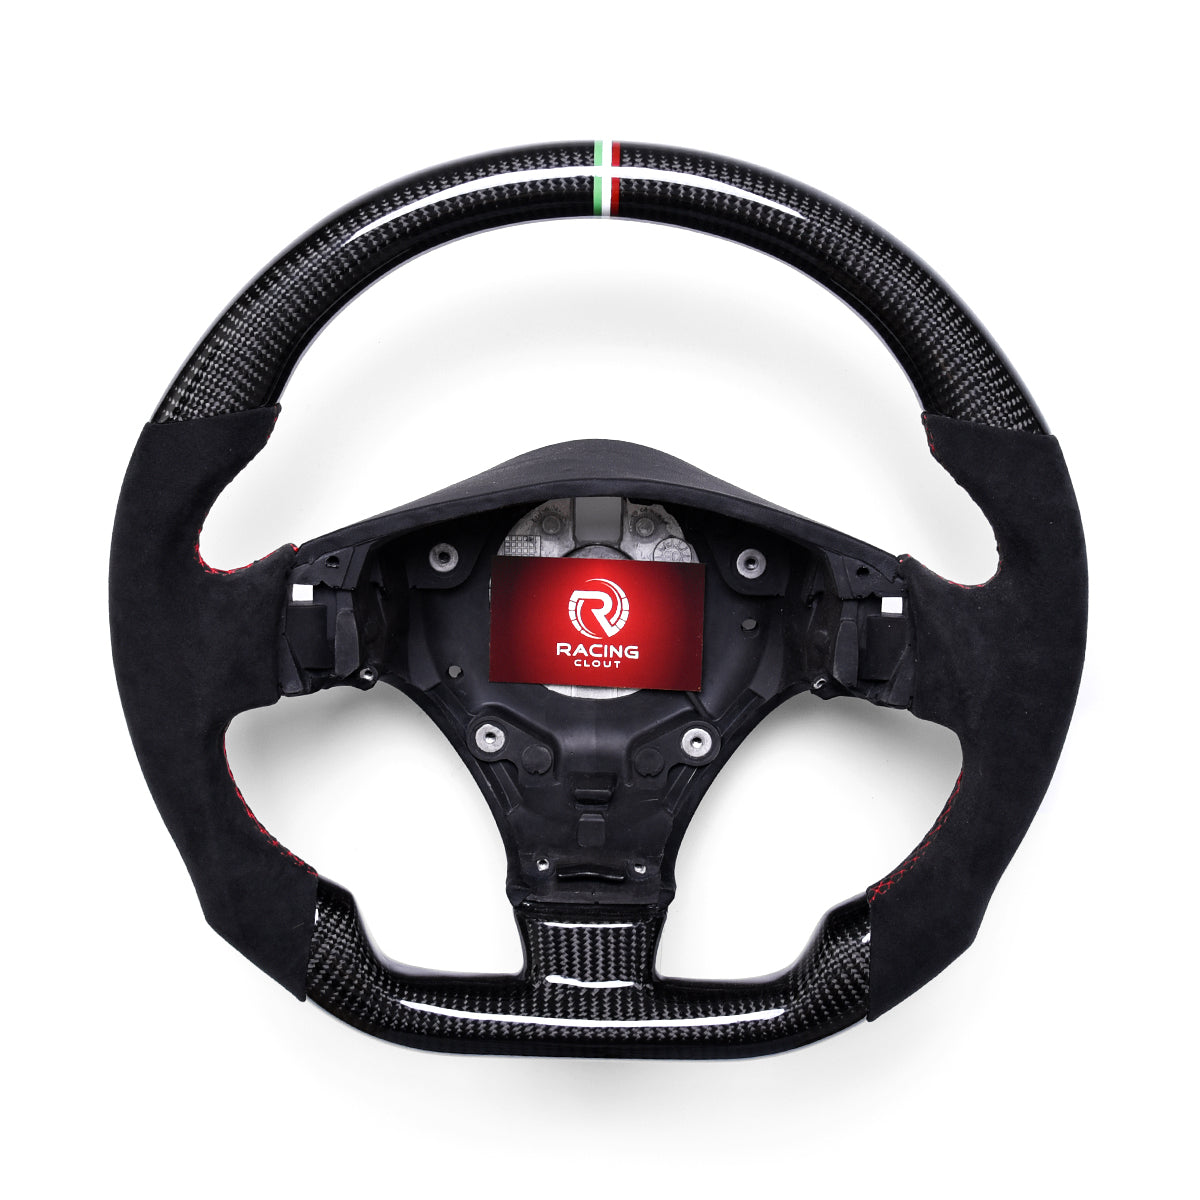 Revolve Carbon Fiber OEM Steering Wheel Maserati GranTurismo GT 2008-2019 - revolvesteering